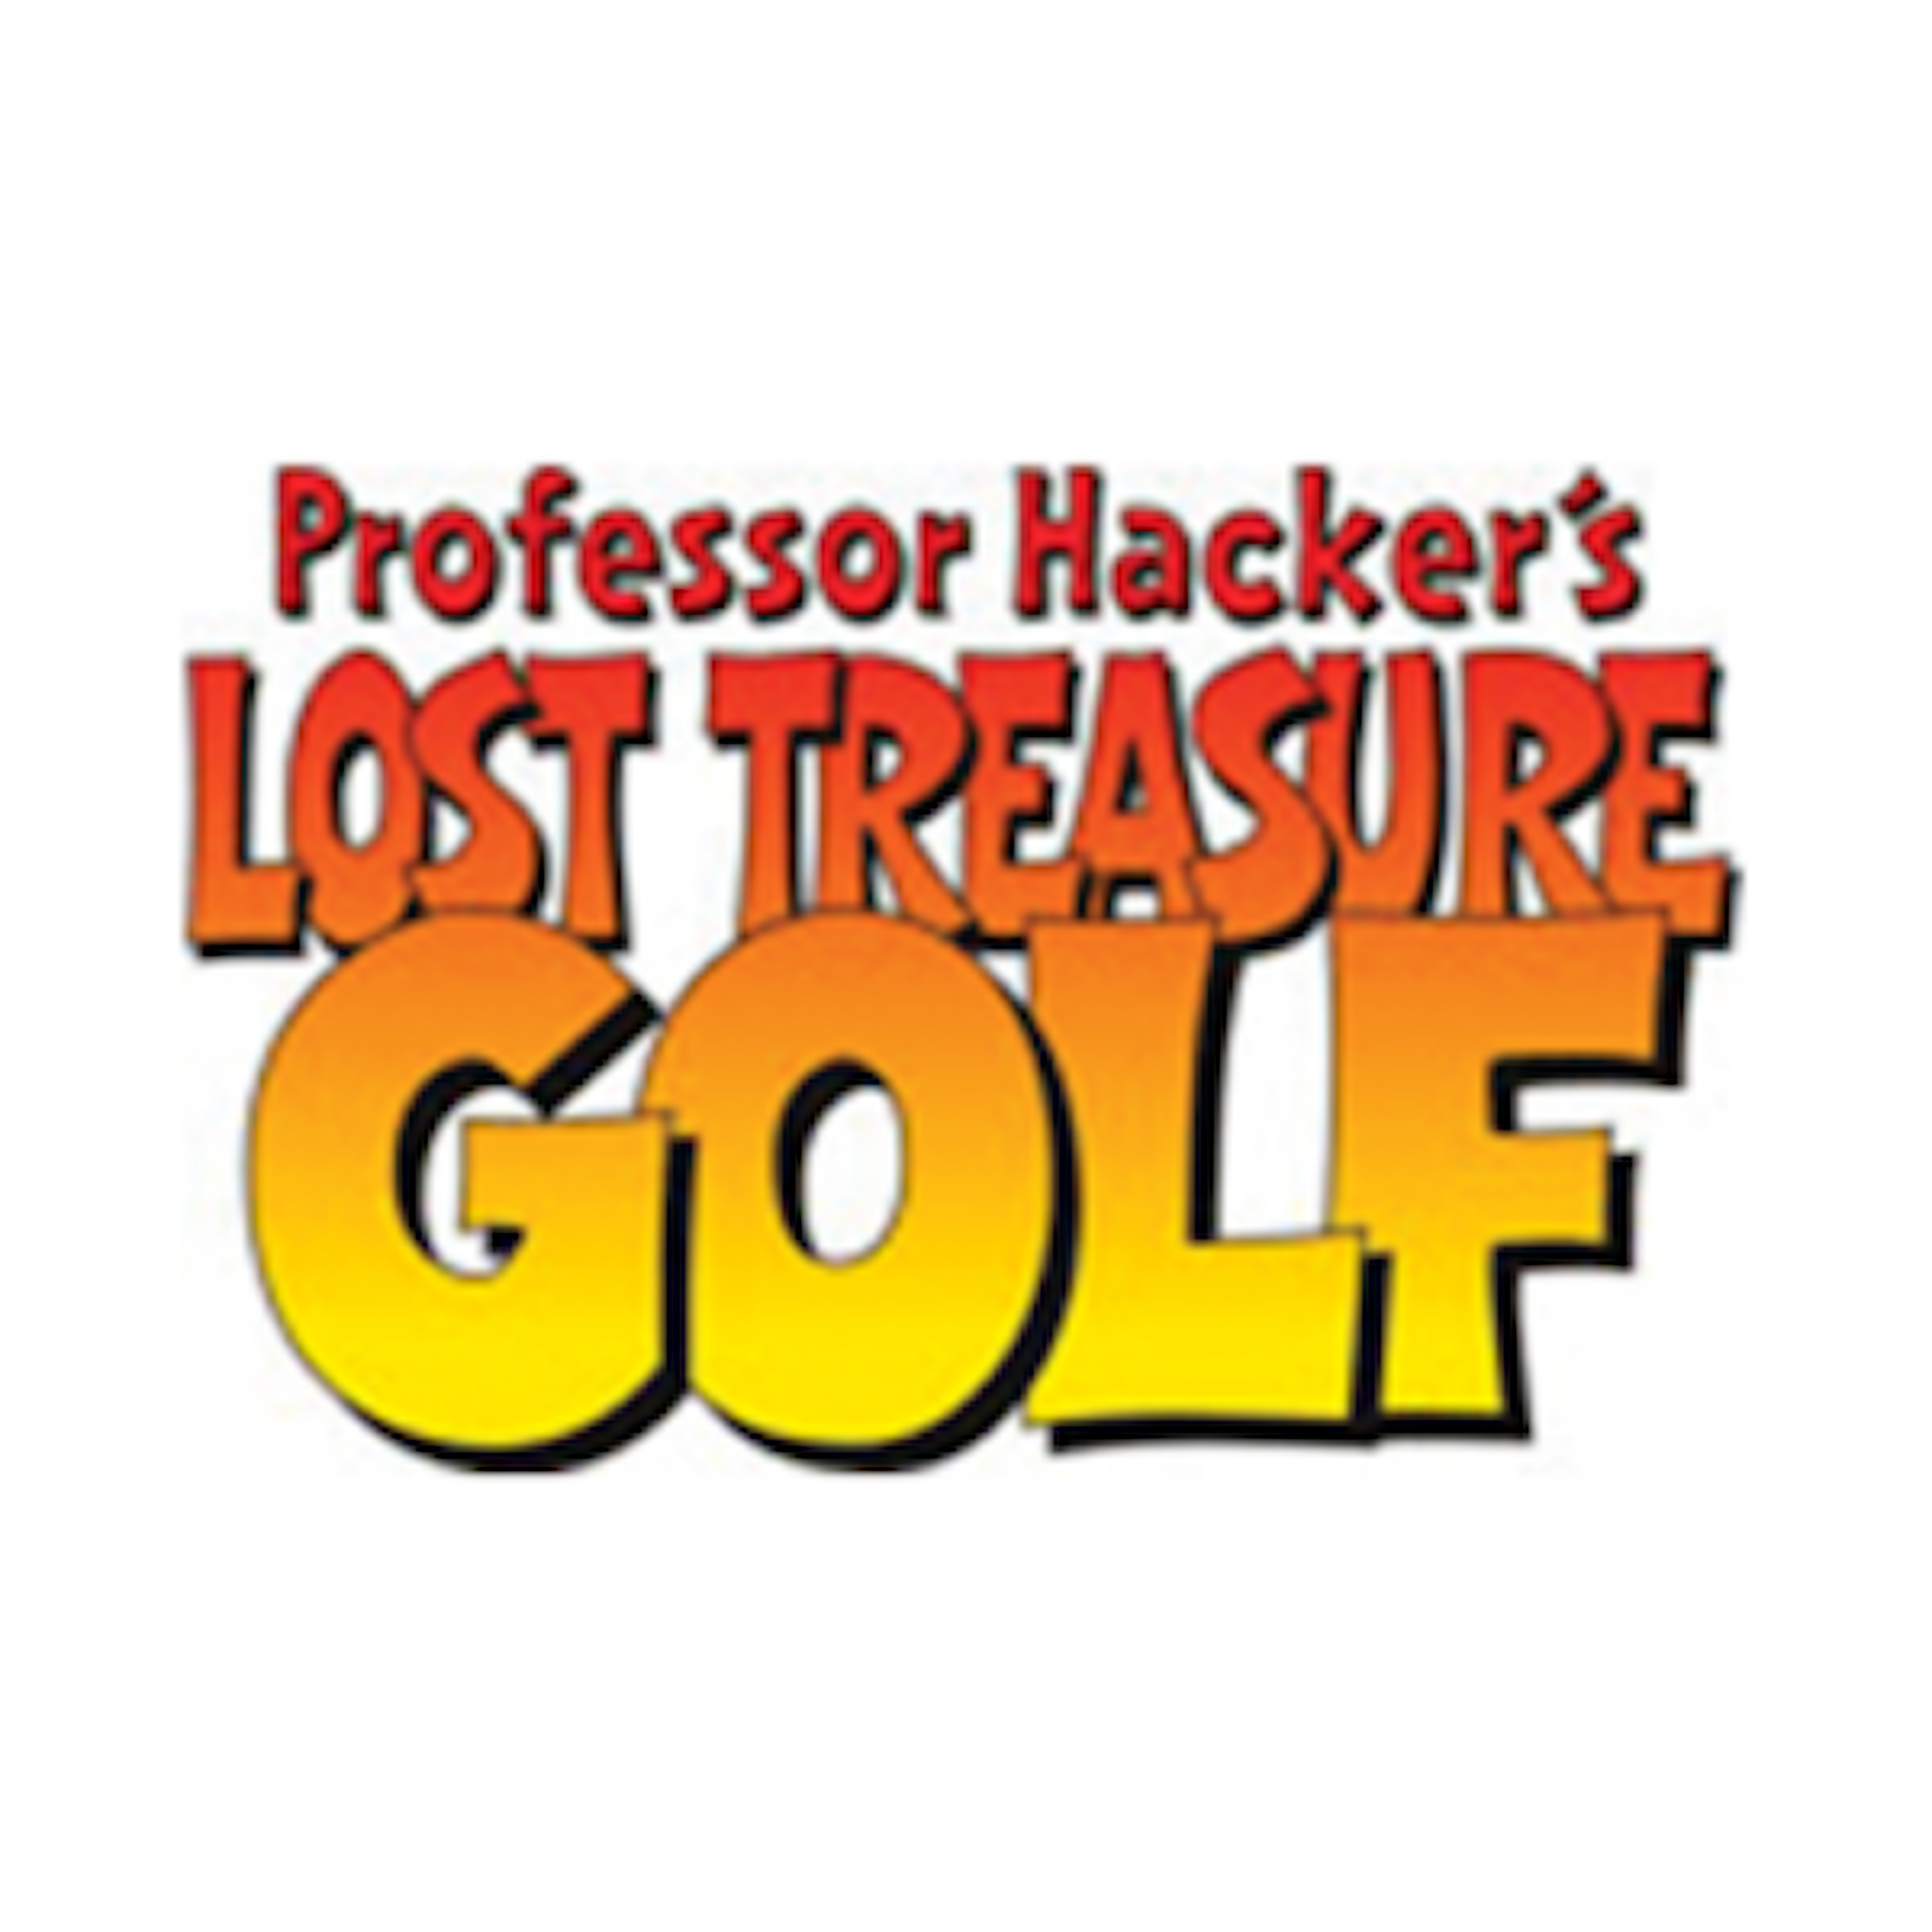 Professor Hacker’s Lost Treasure Golf